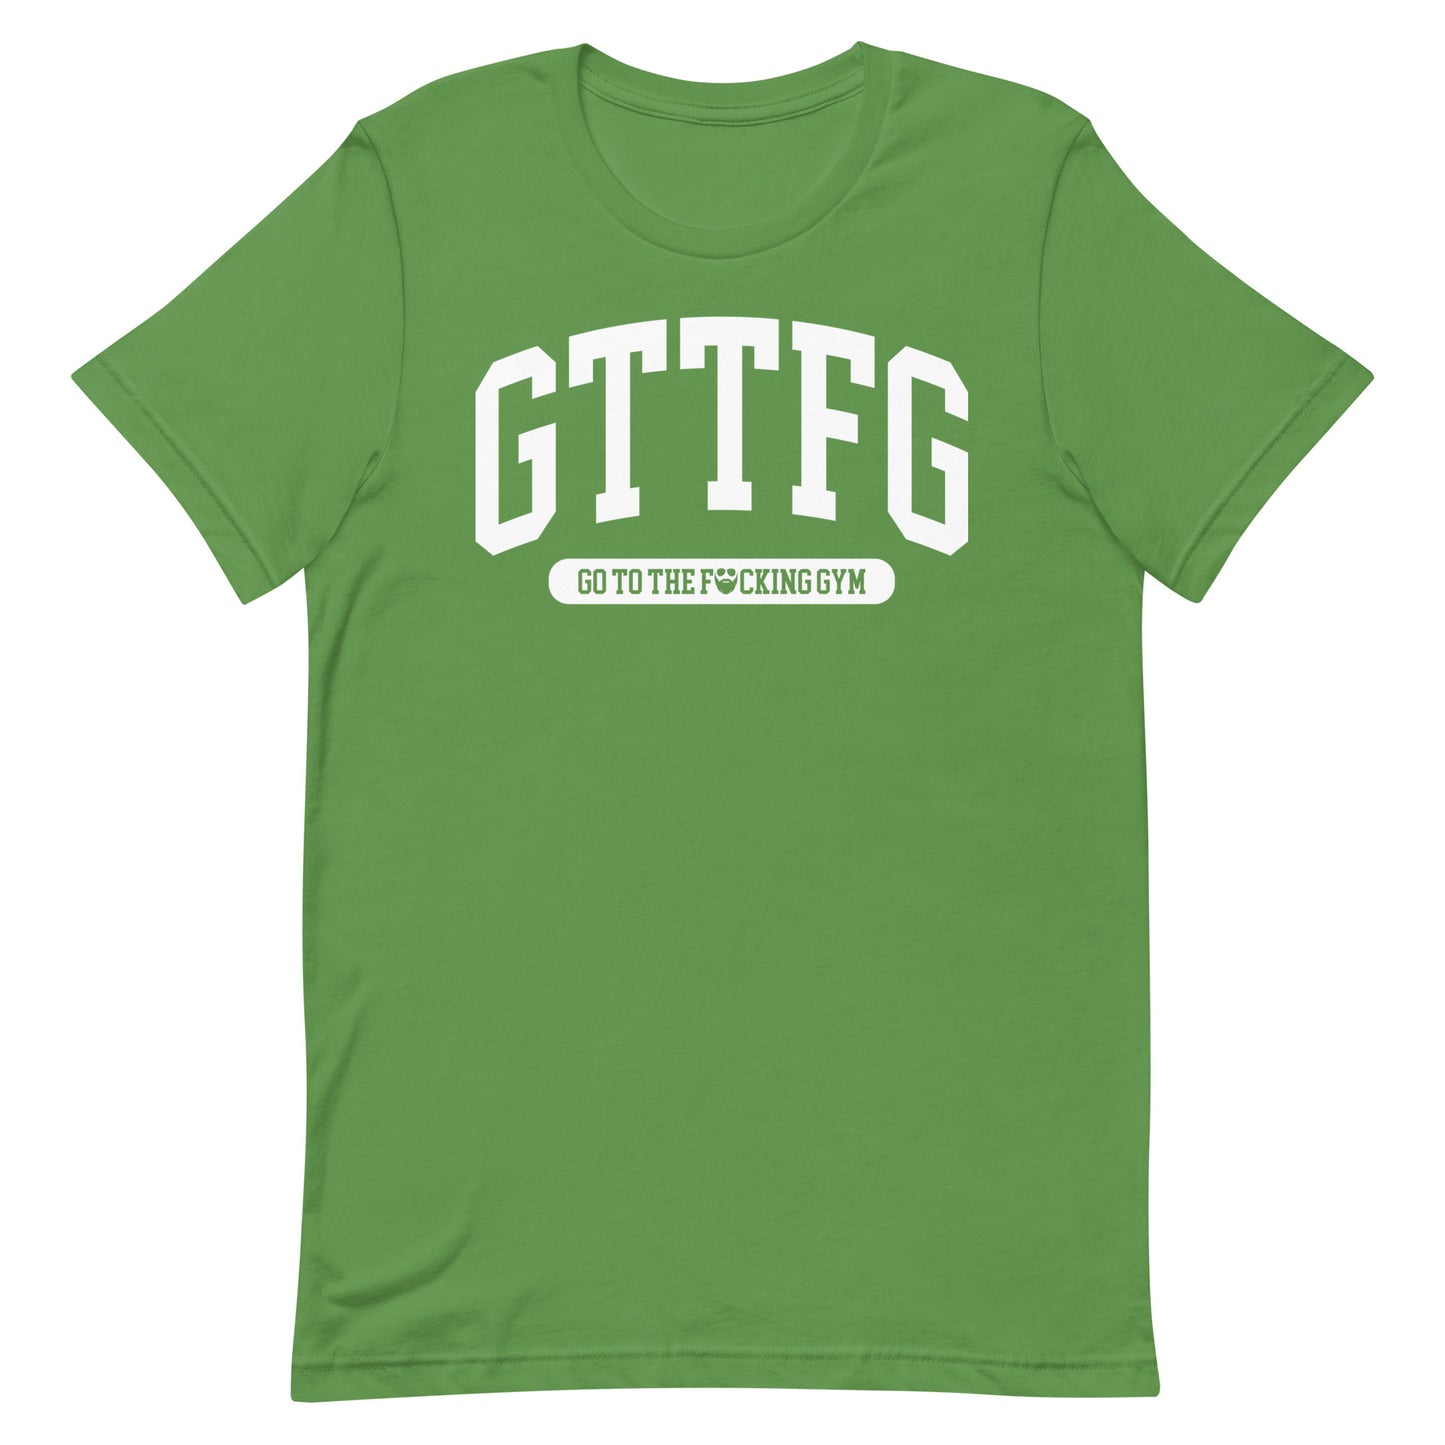 GTTFG College T-Shirt